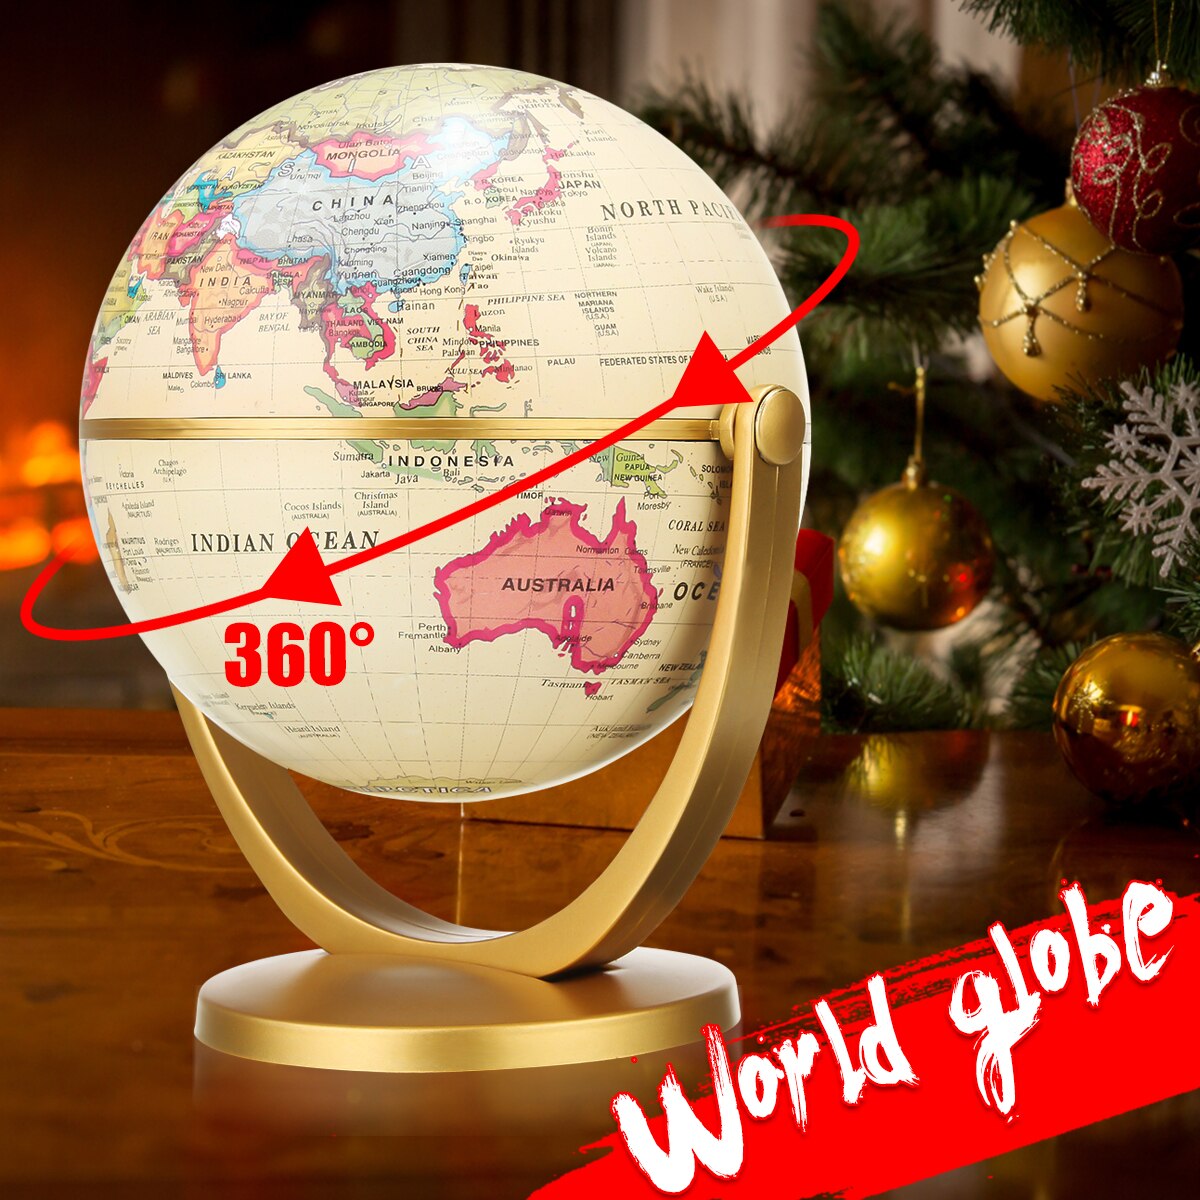 Geography Learning Education Home School Decoration 12cm Retro Globe 360 Rotating Earth World Ocean Map Ball Antique Desktop